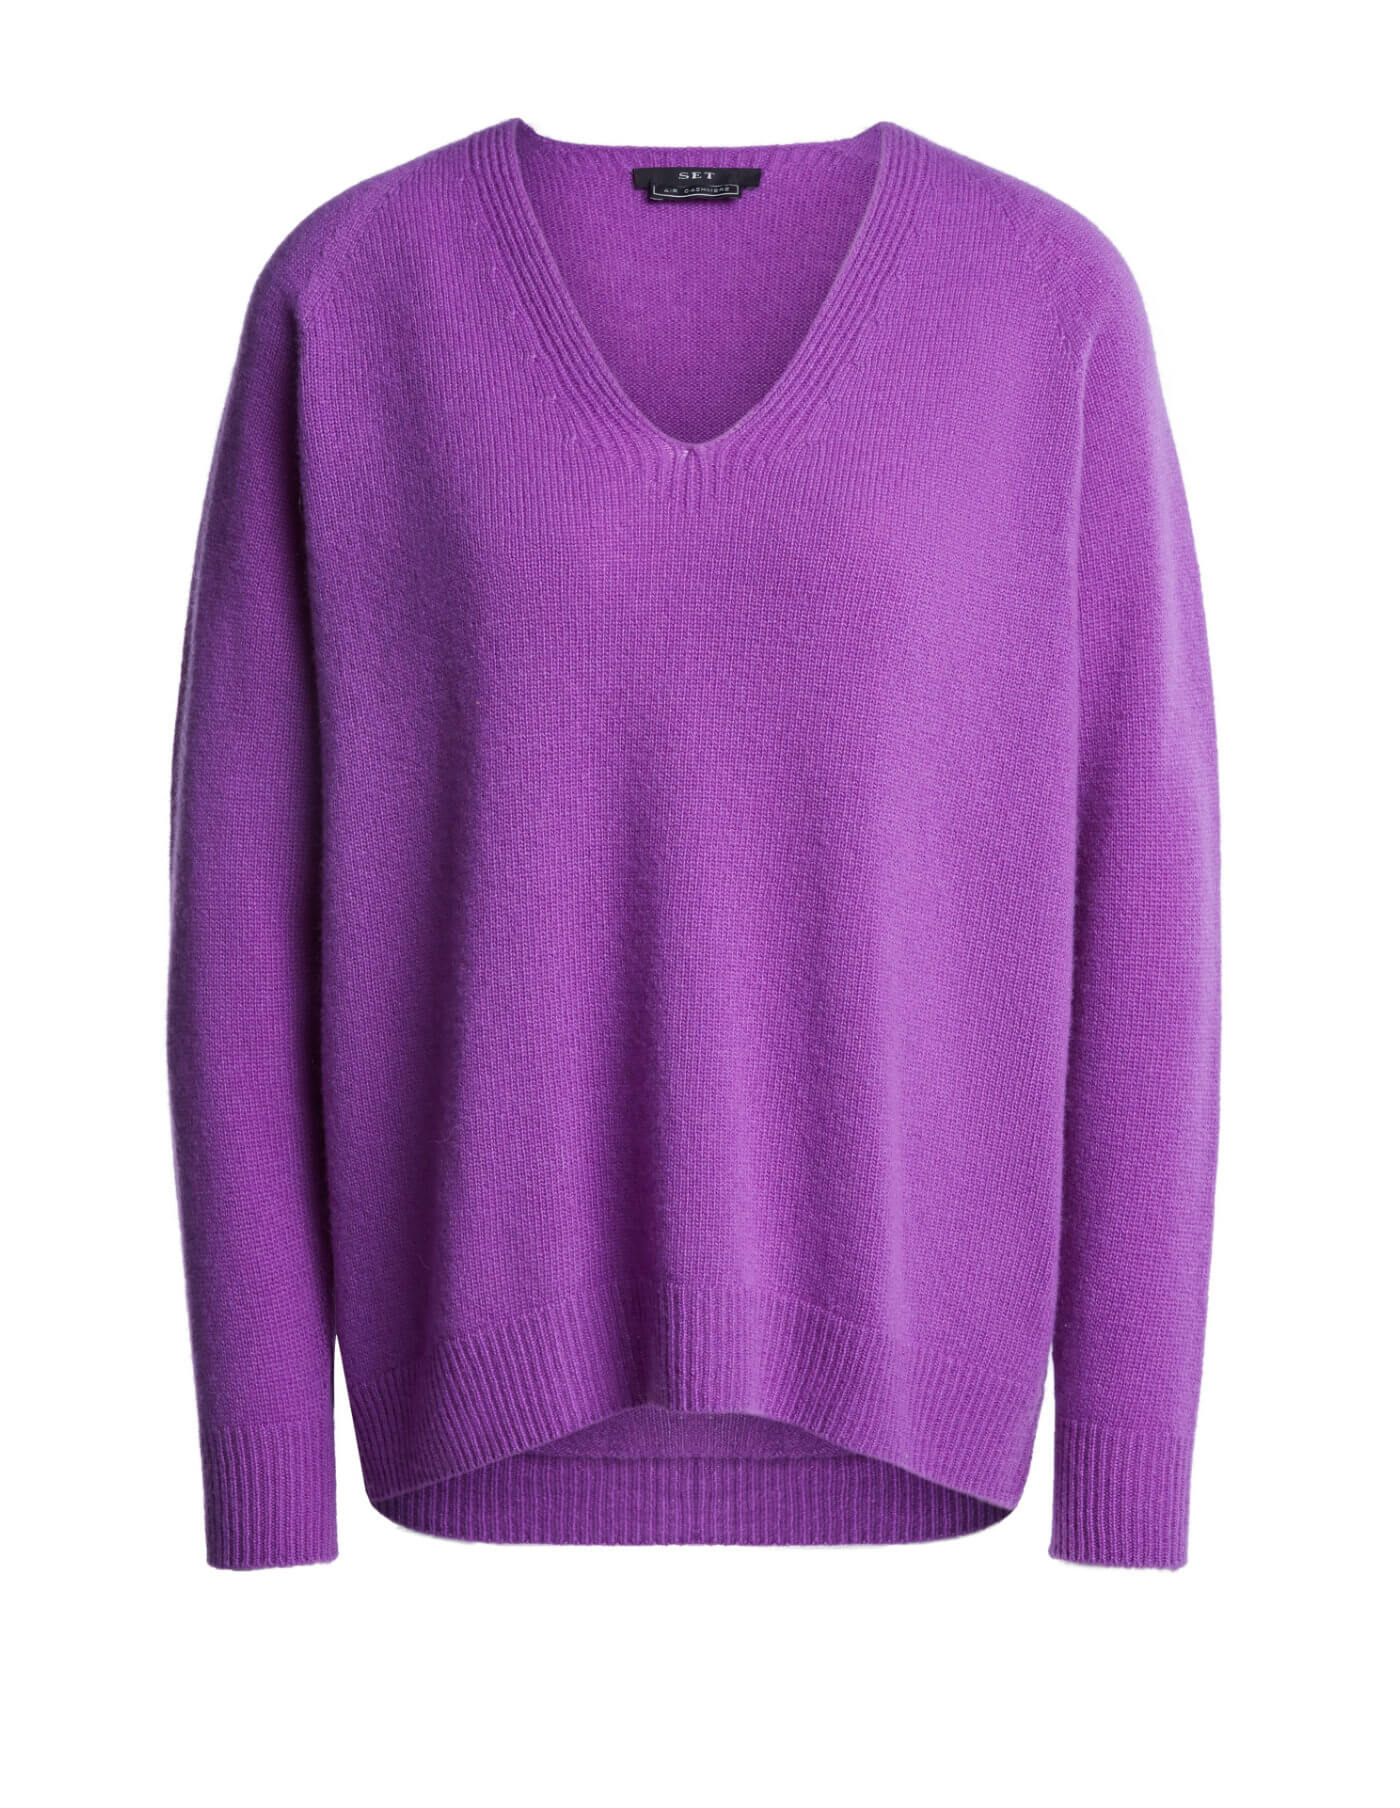 Set Knit Jumper In Violett at Storm Fashion